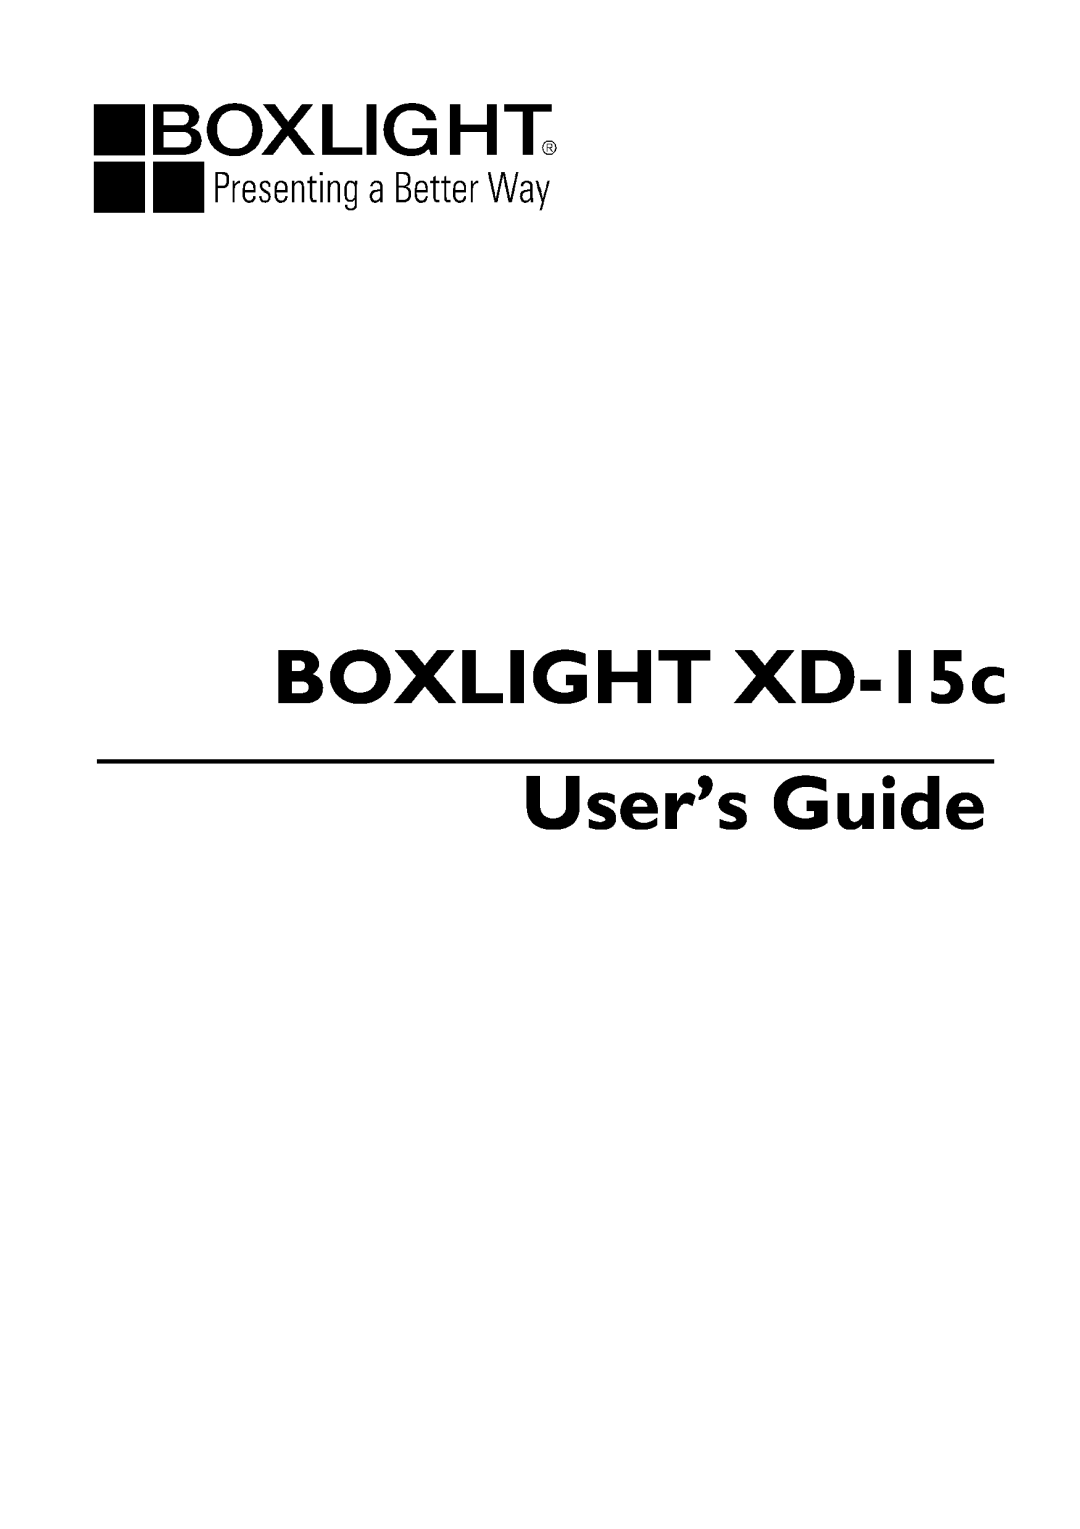 BOXLIGHT manual BOXLIGHT XD-15c User’s Guide 